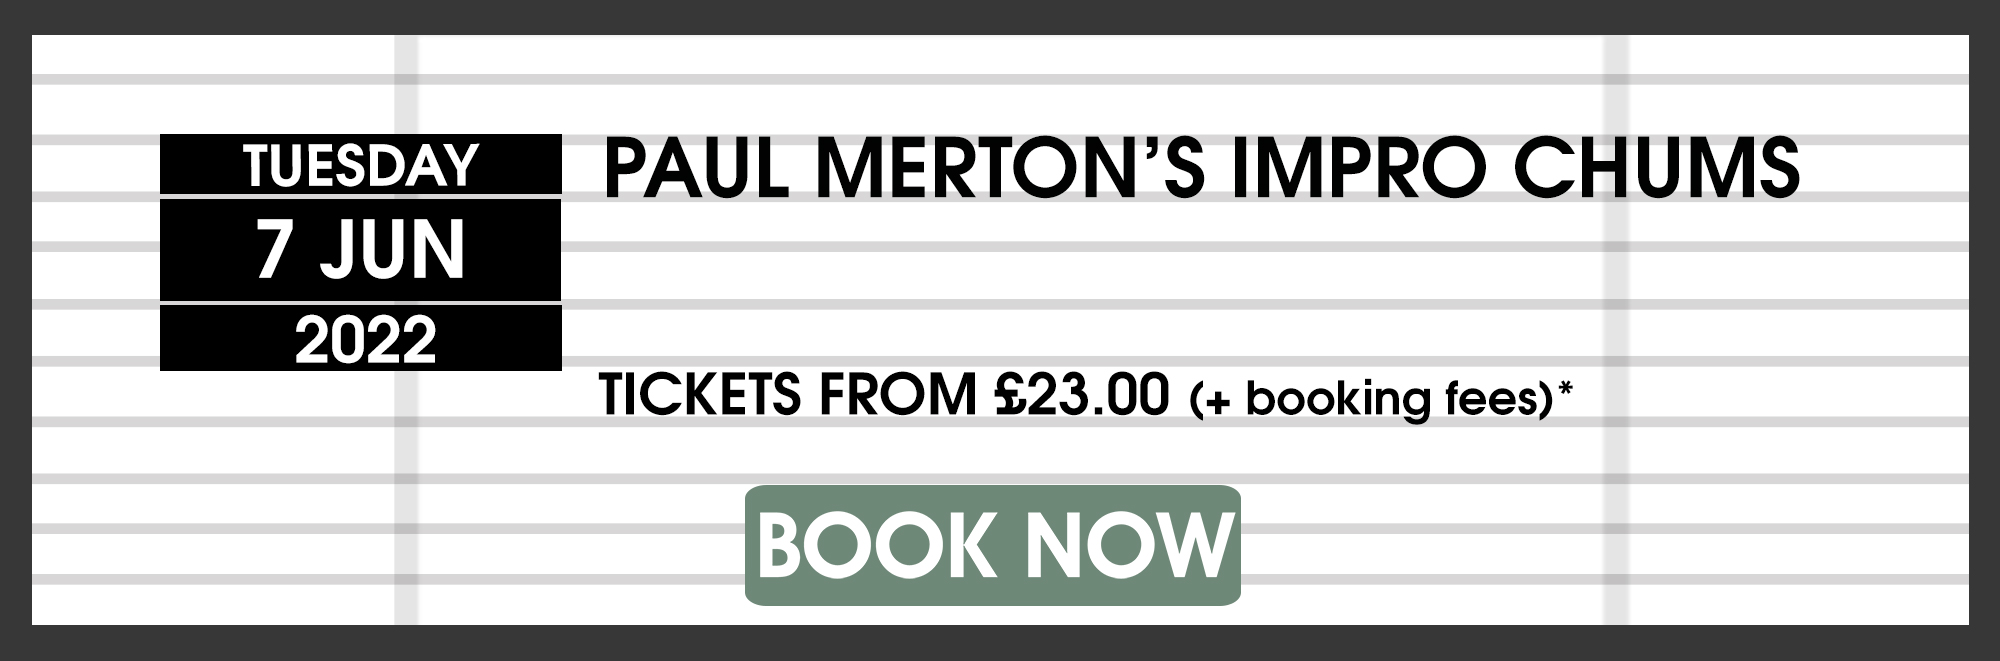 07.06.22 PAUL MERTON BOOK NOW